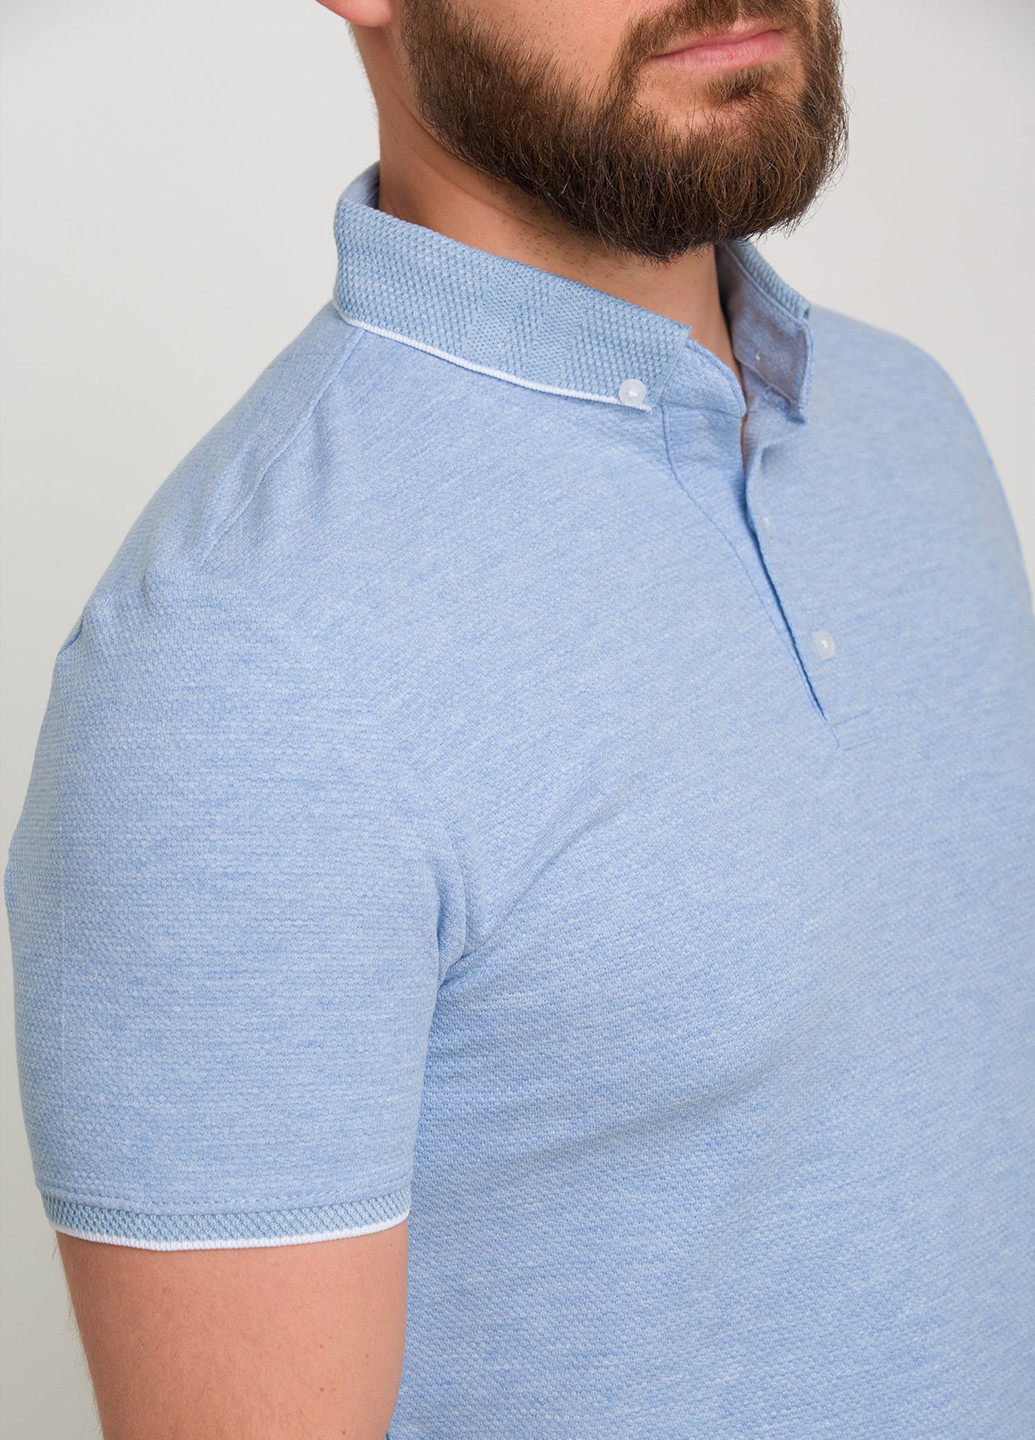 Индиго футболка-поло для мужчин Trend Collection меланжевая